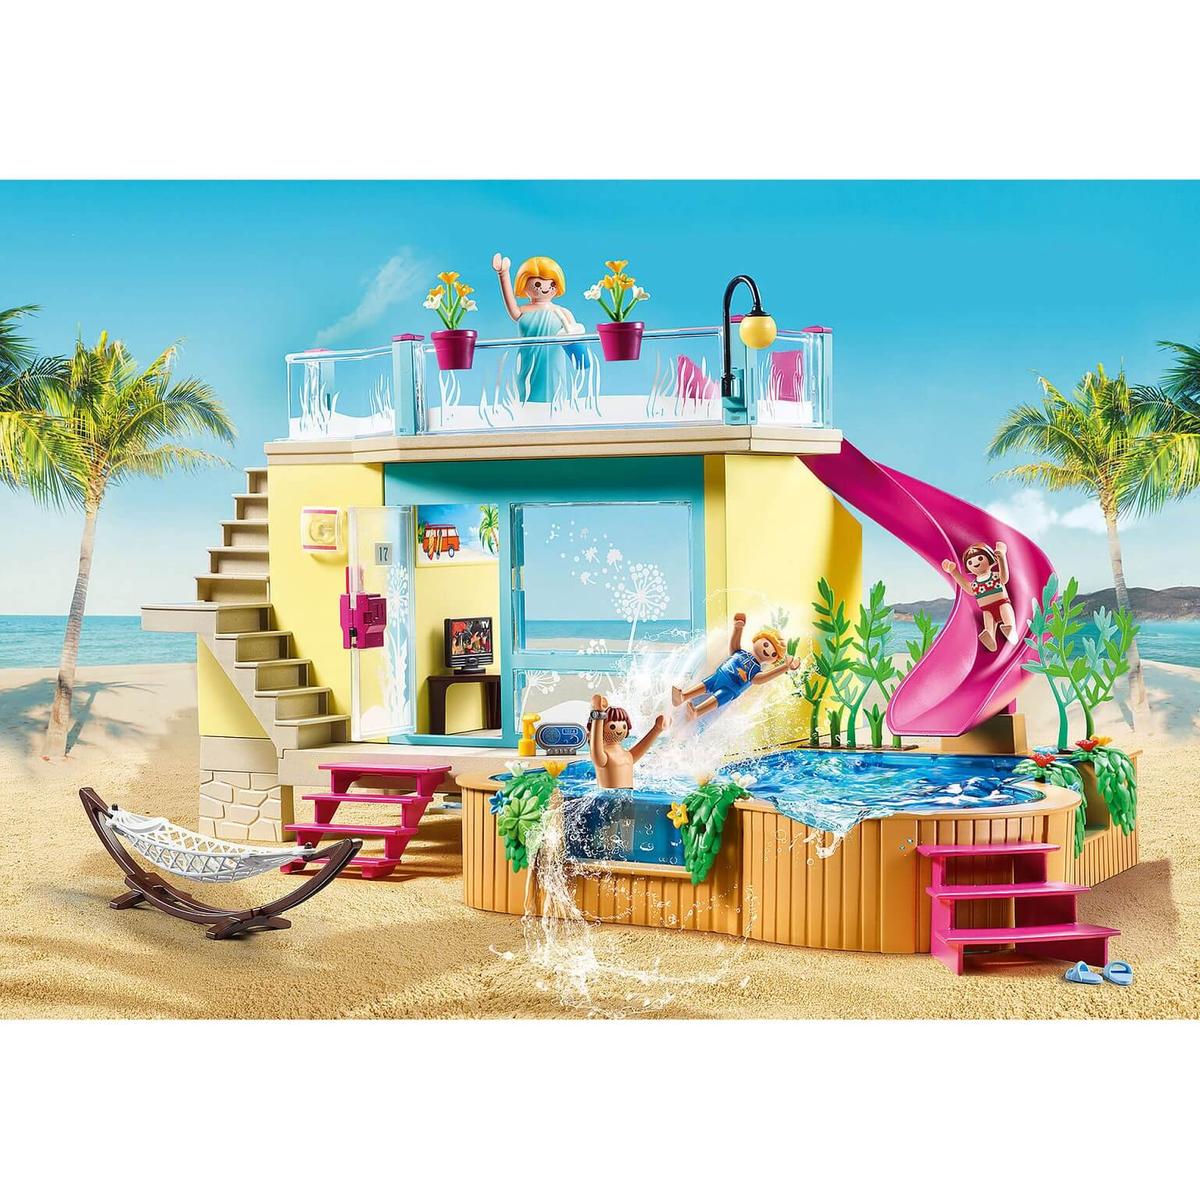 Playmobil - Bungalow con piscina 70435 | Diversion En Familia | Toys"R"Us  España